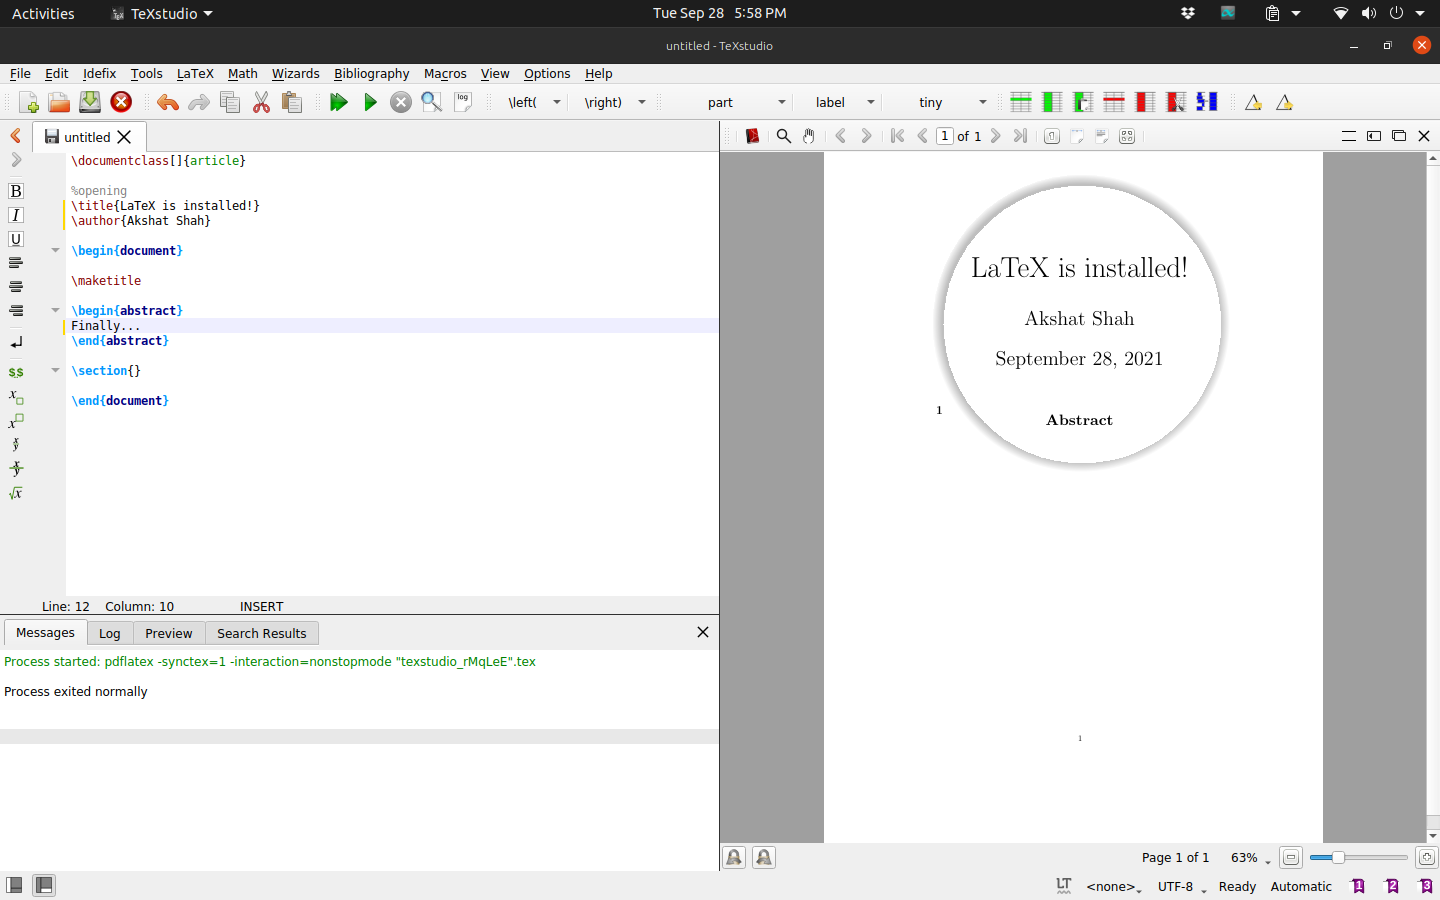 Texlive linux editor download